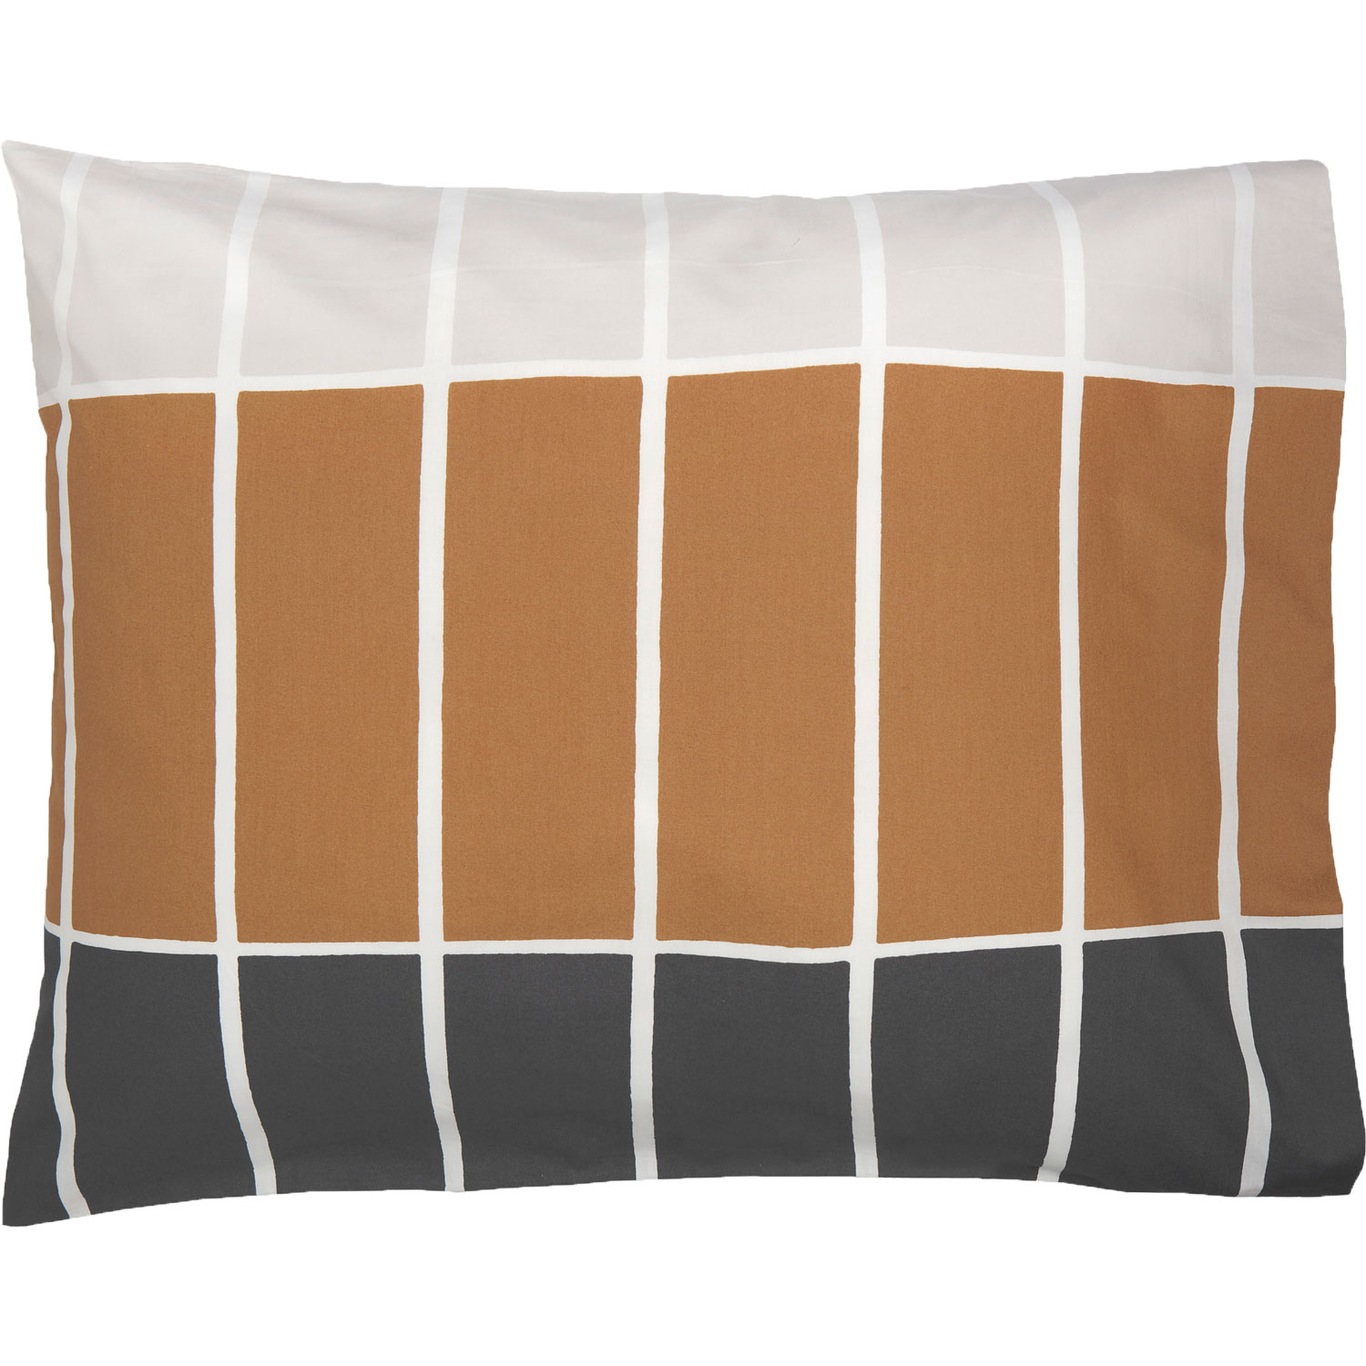 Tiiliskivi Pillowcase 50x60 cm, Beige / Charcoal / Dark Brown